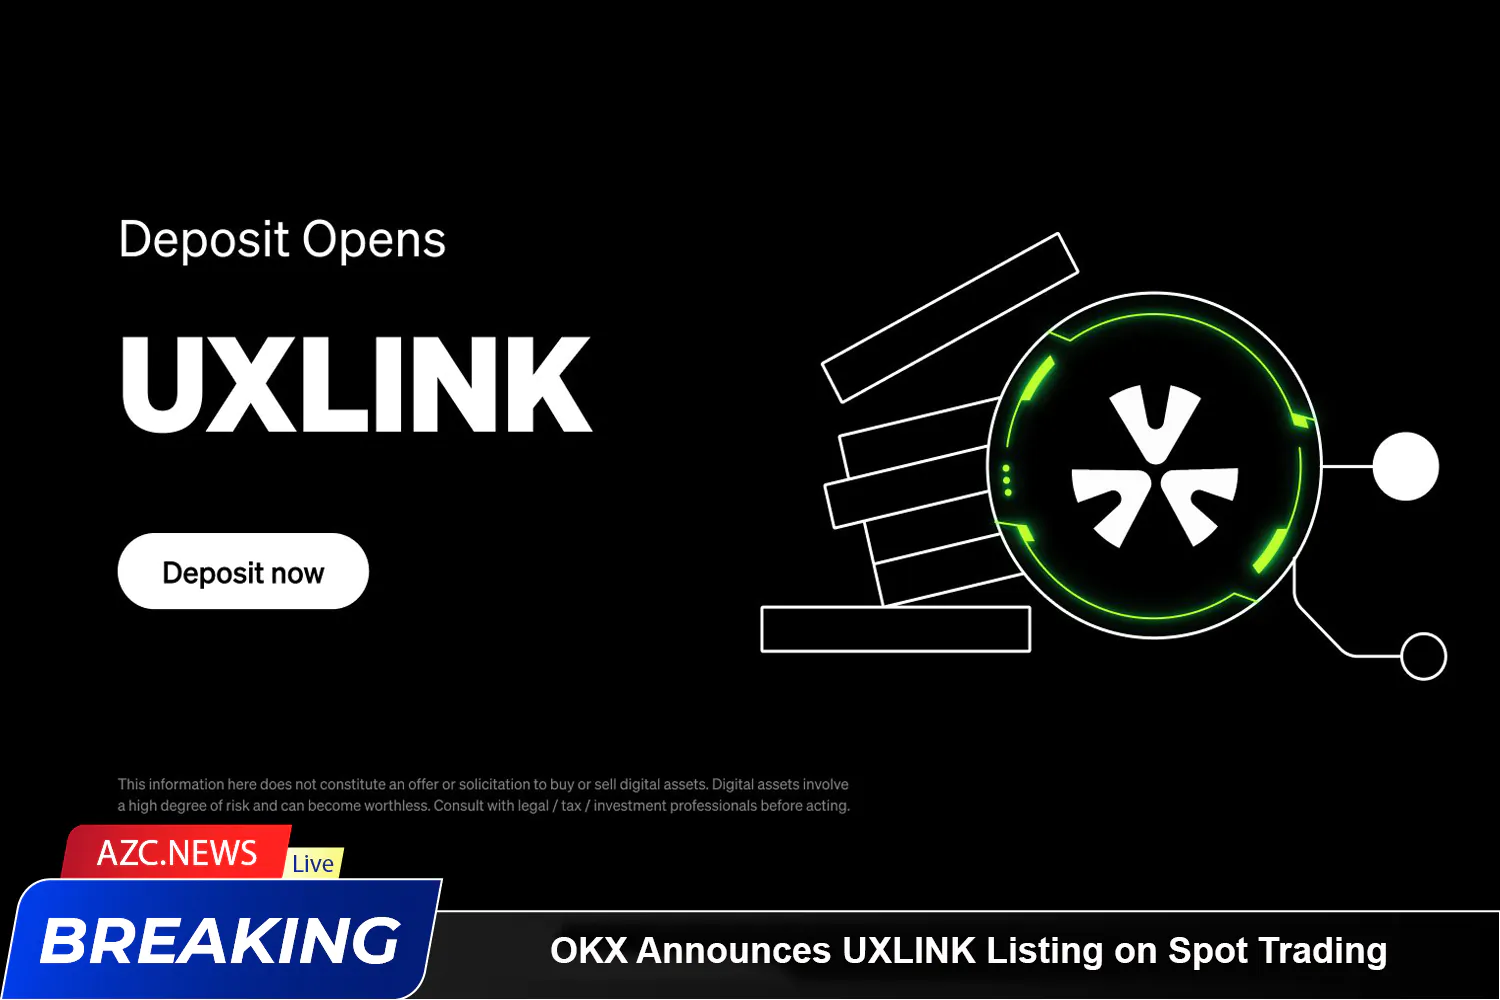 Okx Announces Uxlink Listing On Spot Trading